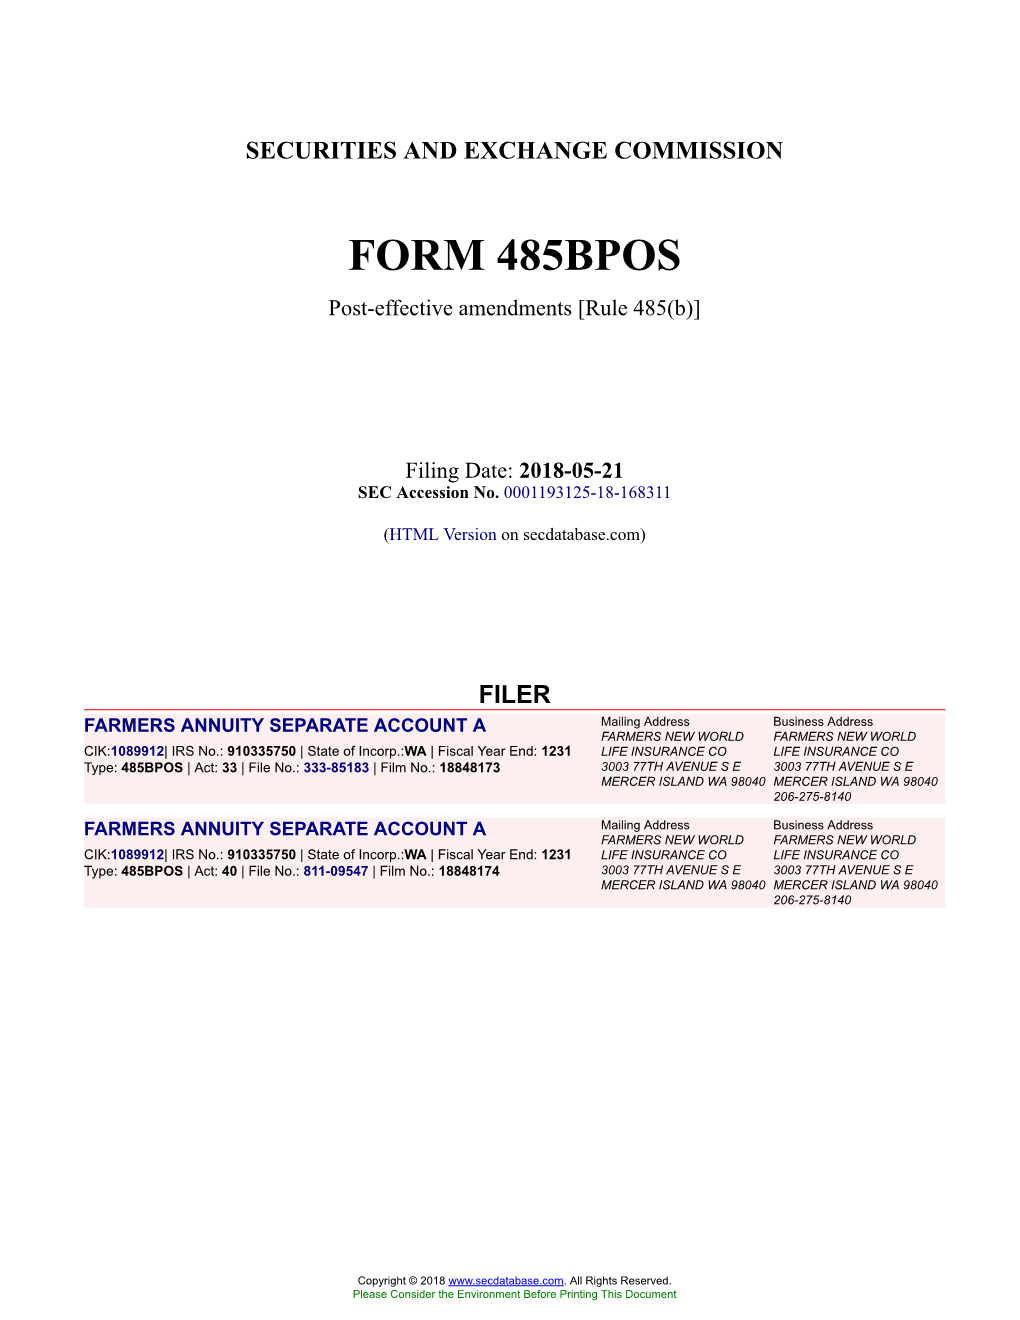 FARMERS ANNUITY SEPARATE ACCOUNT a Form 485BPOS Filed